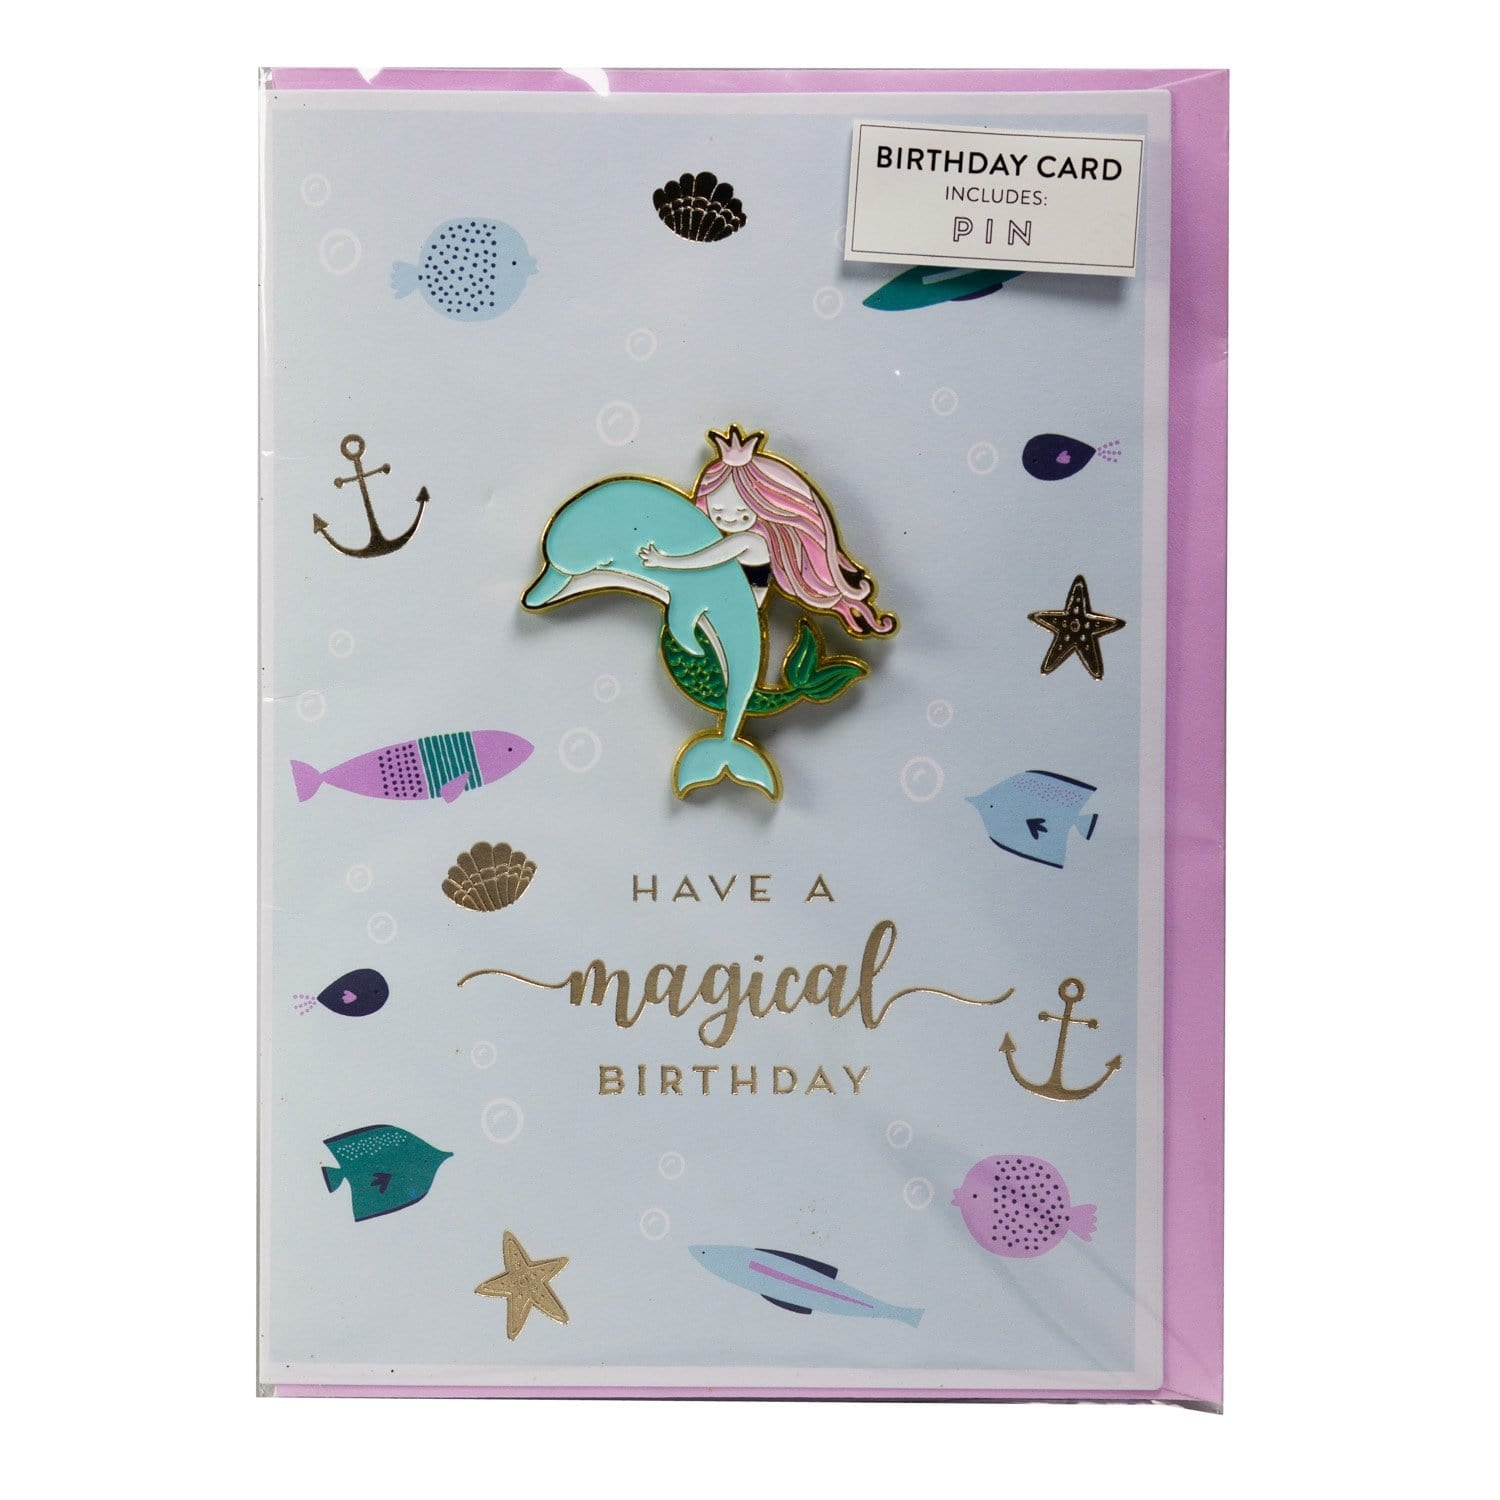 Mermaid Birthday Card with Pin